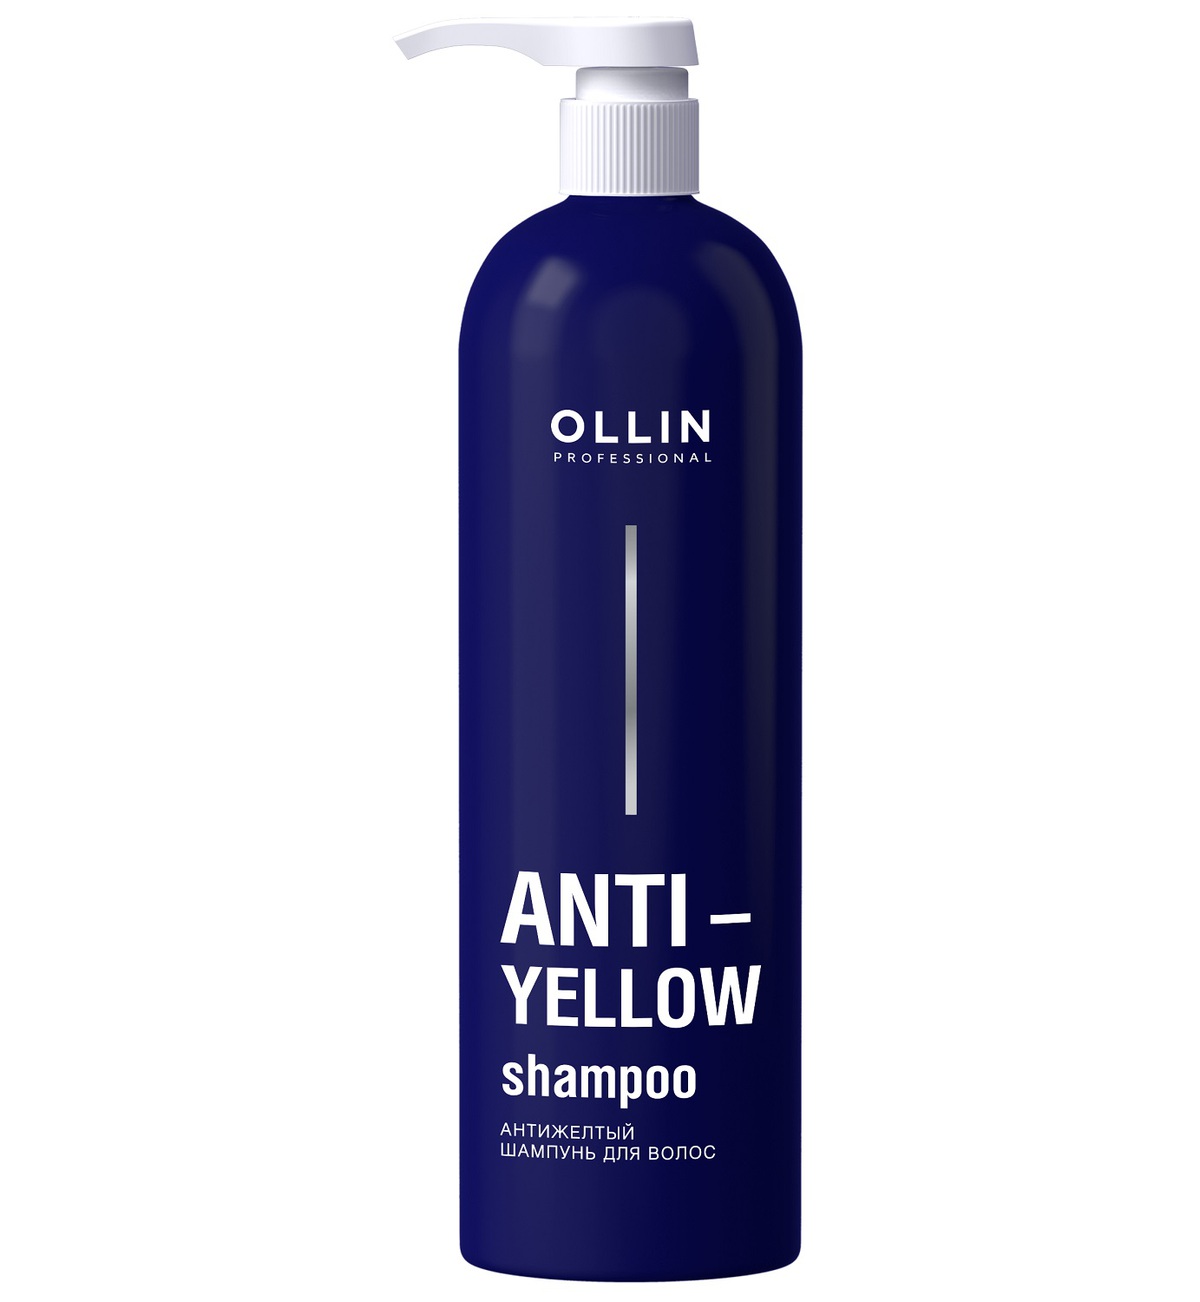 Ollin Professional Антижелтый шампунь для волос Anti-Yellow Shampoo, 500 мл (Ollin Professional, Anti-Yellow) шампунь для волос ollin professional антижелтый шампунь для волос anti yellow shampoo